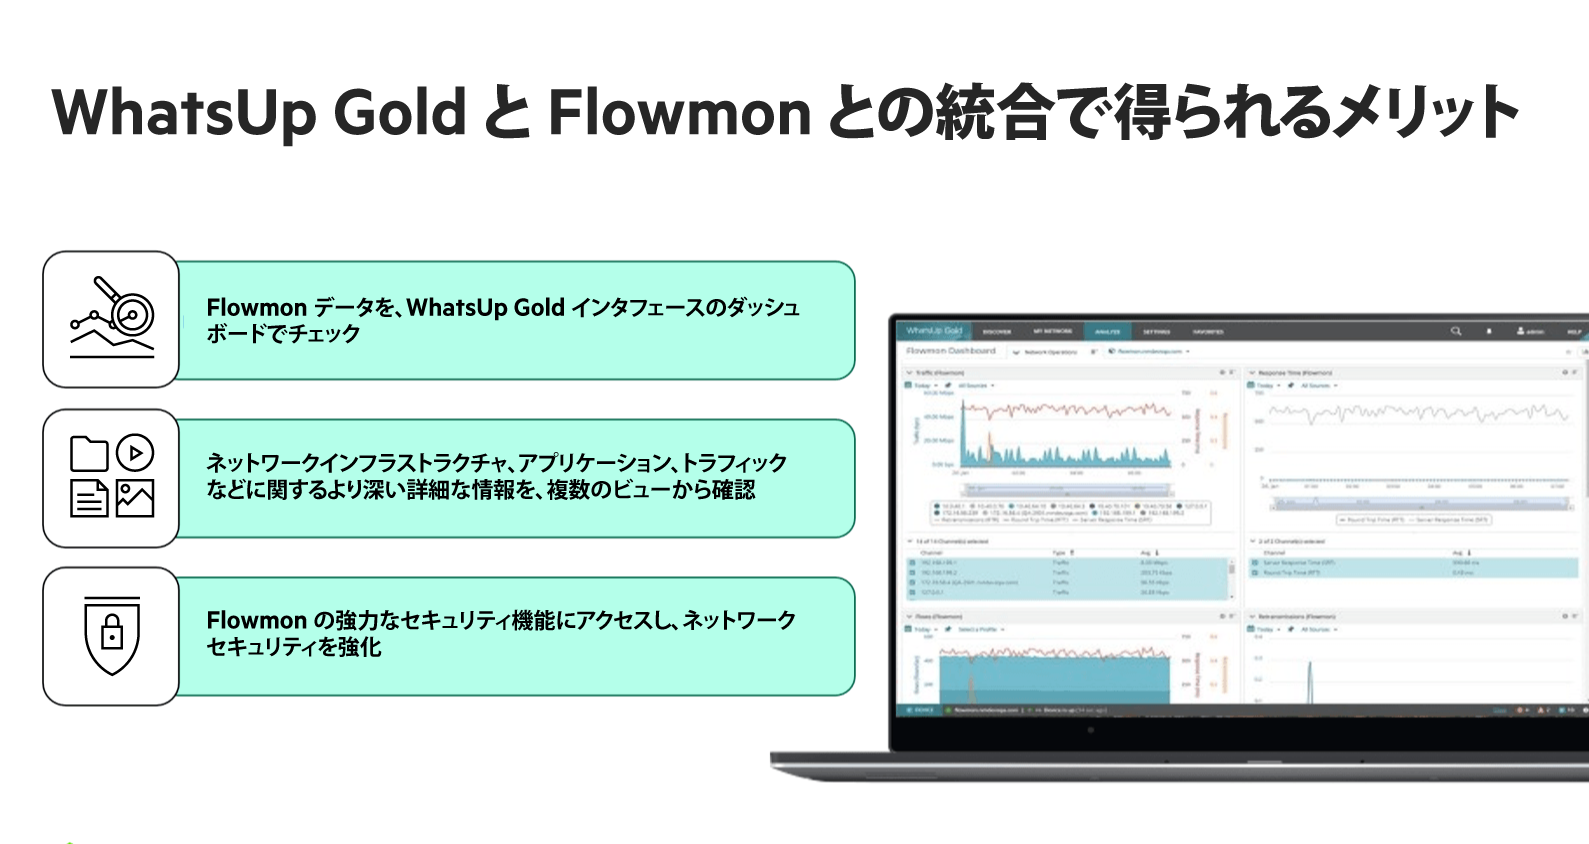 WhatsUp Gold と Flowmon 統合のメリット